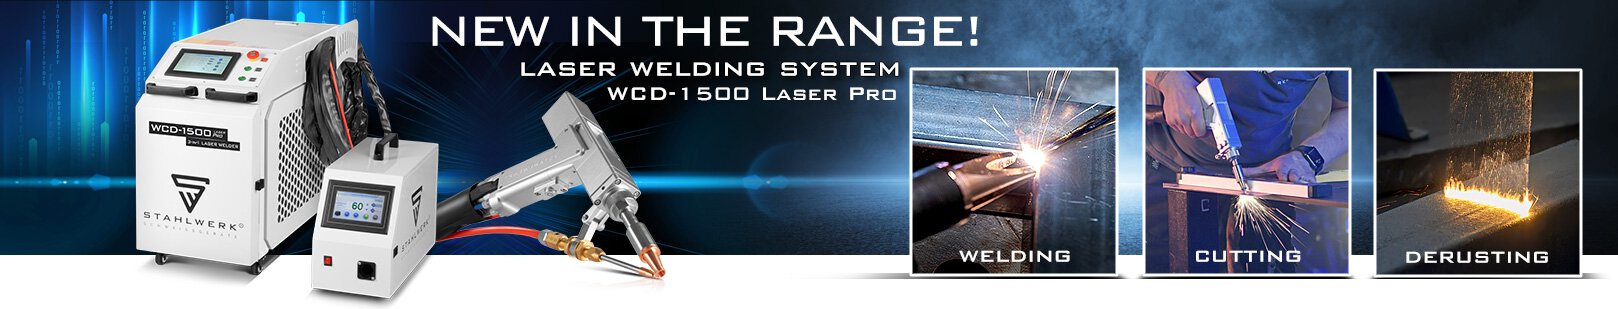 Apparecchiature per la saldatura laser